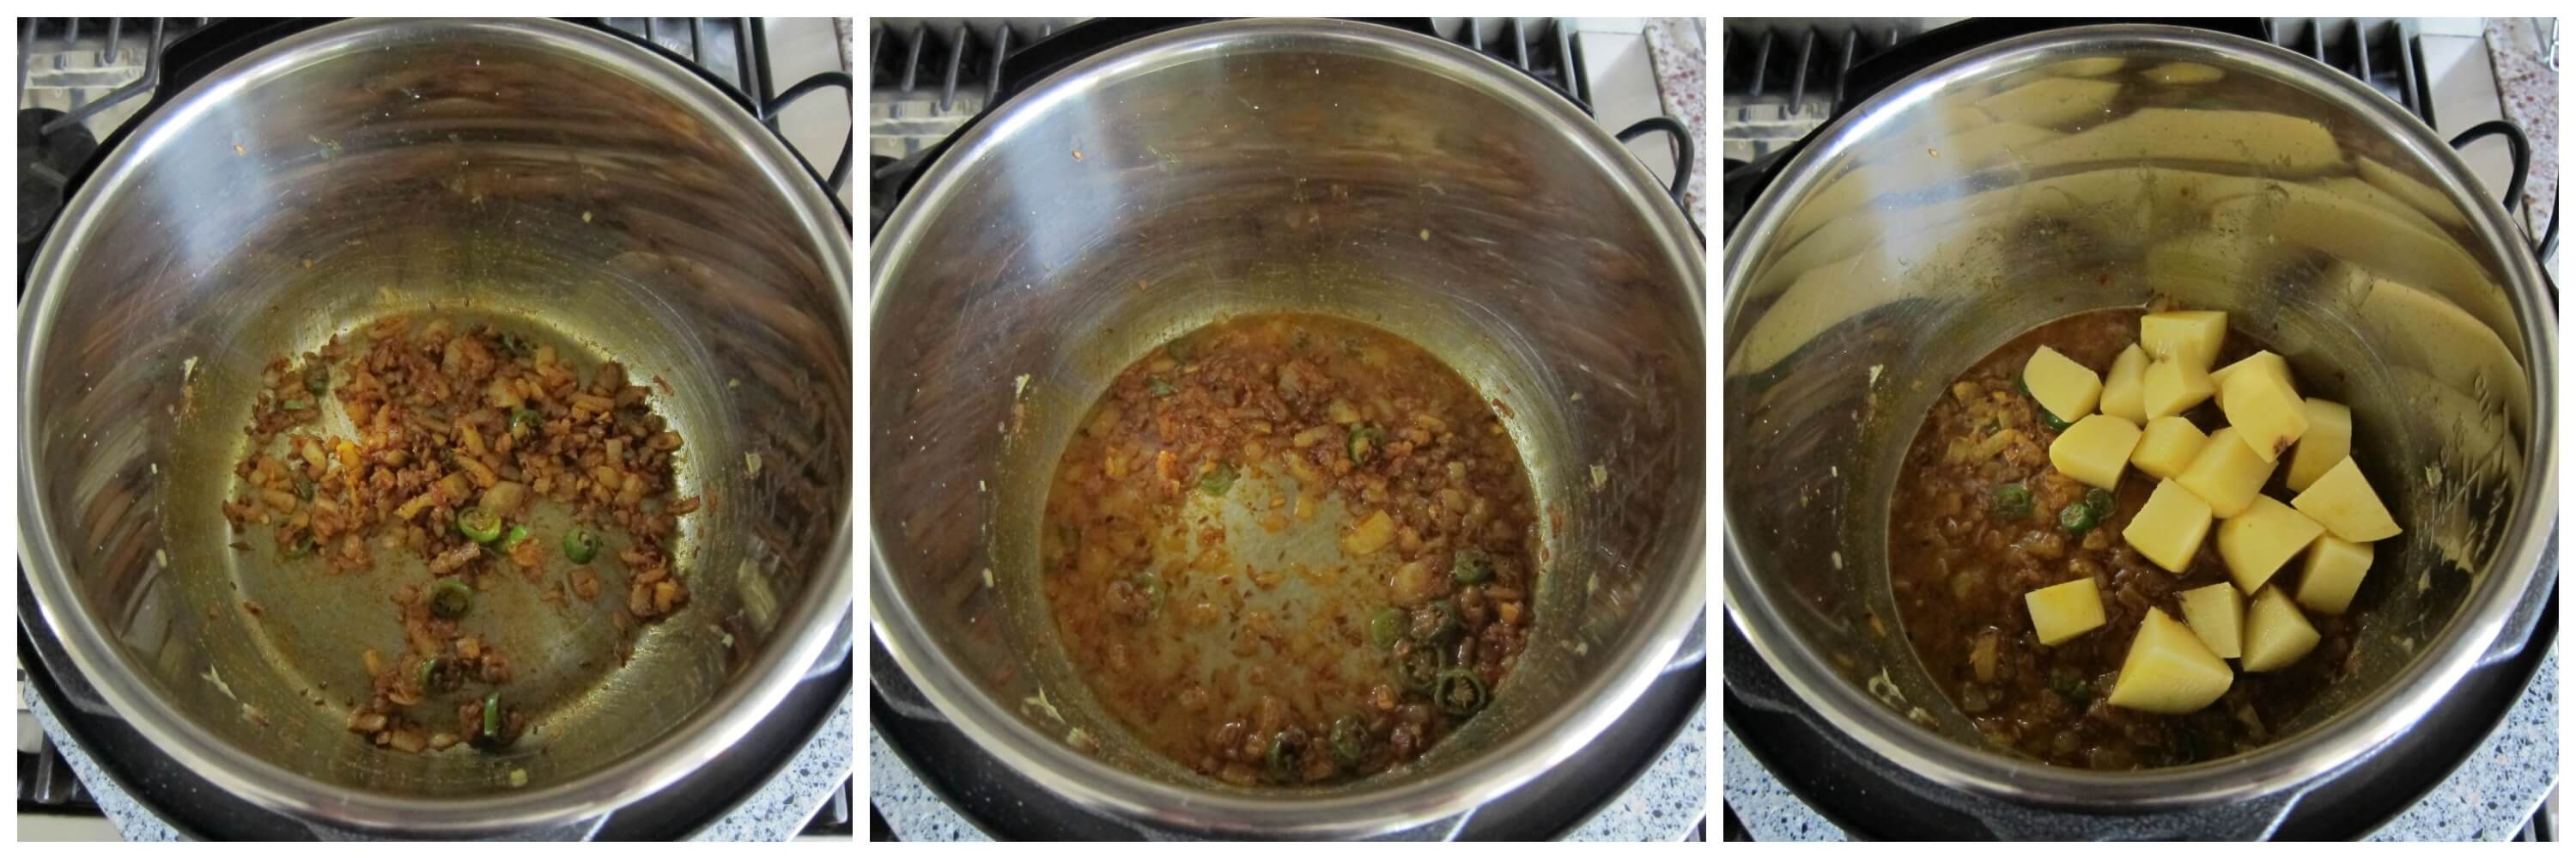 Instant Pot Aloo Gobi - saute spices, add potatoes